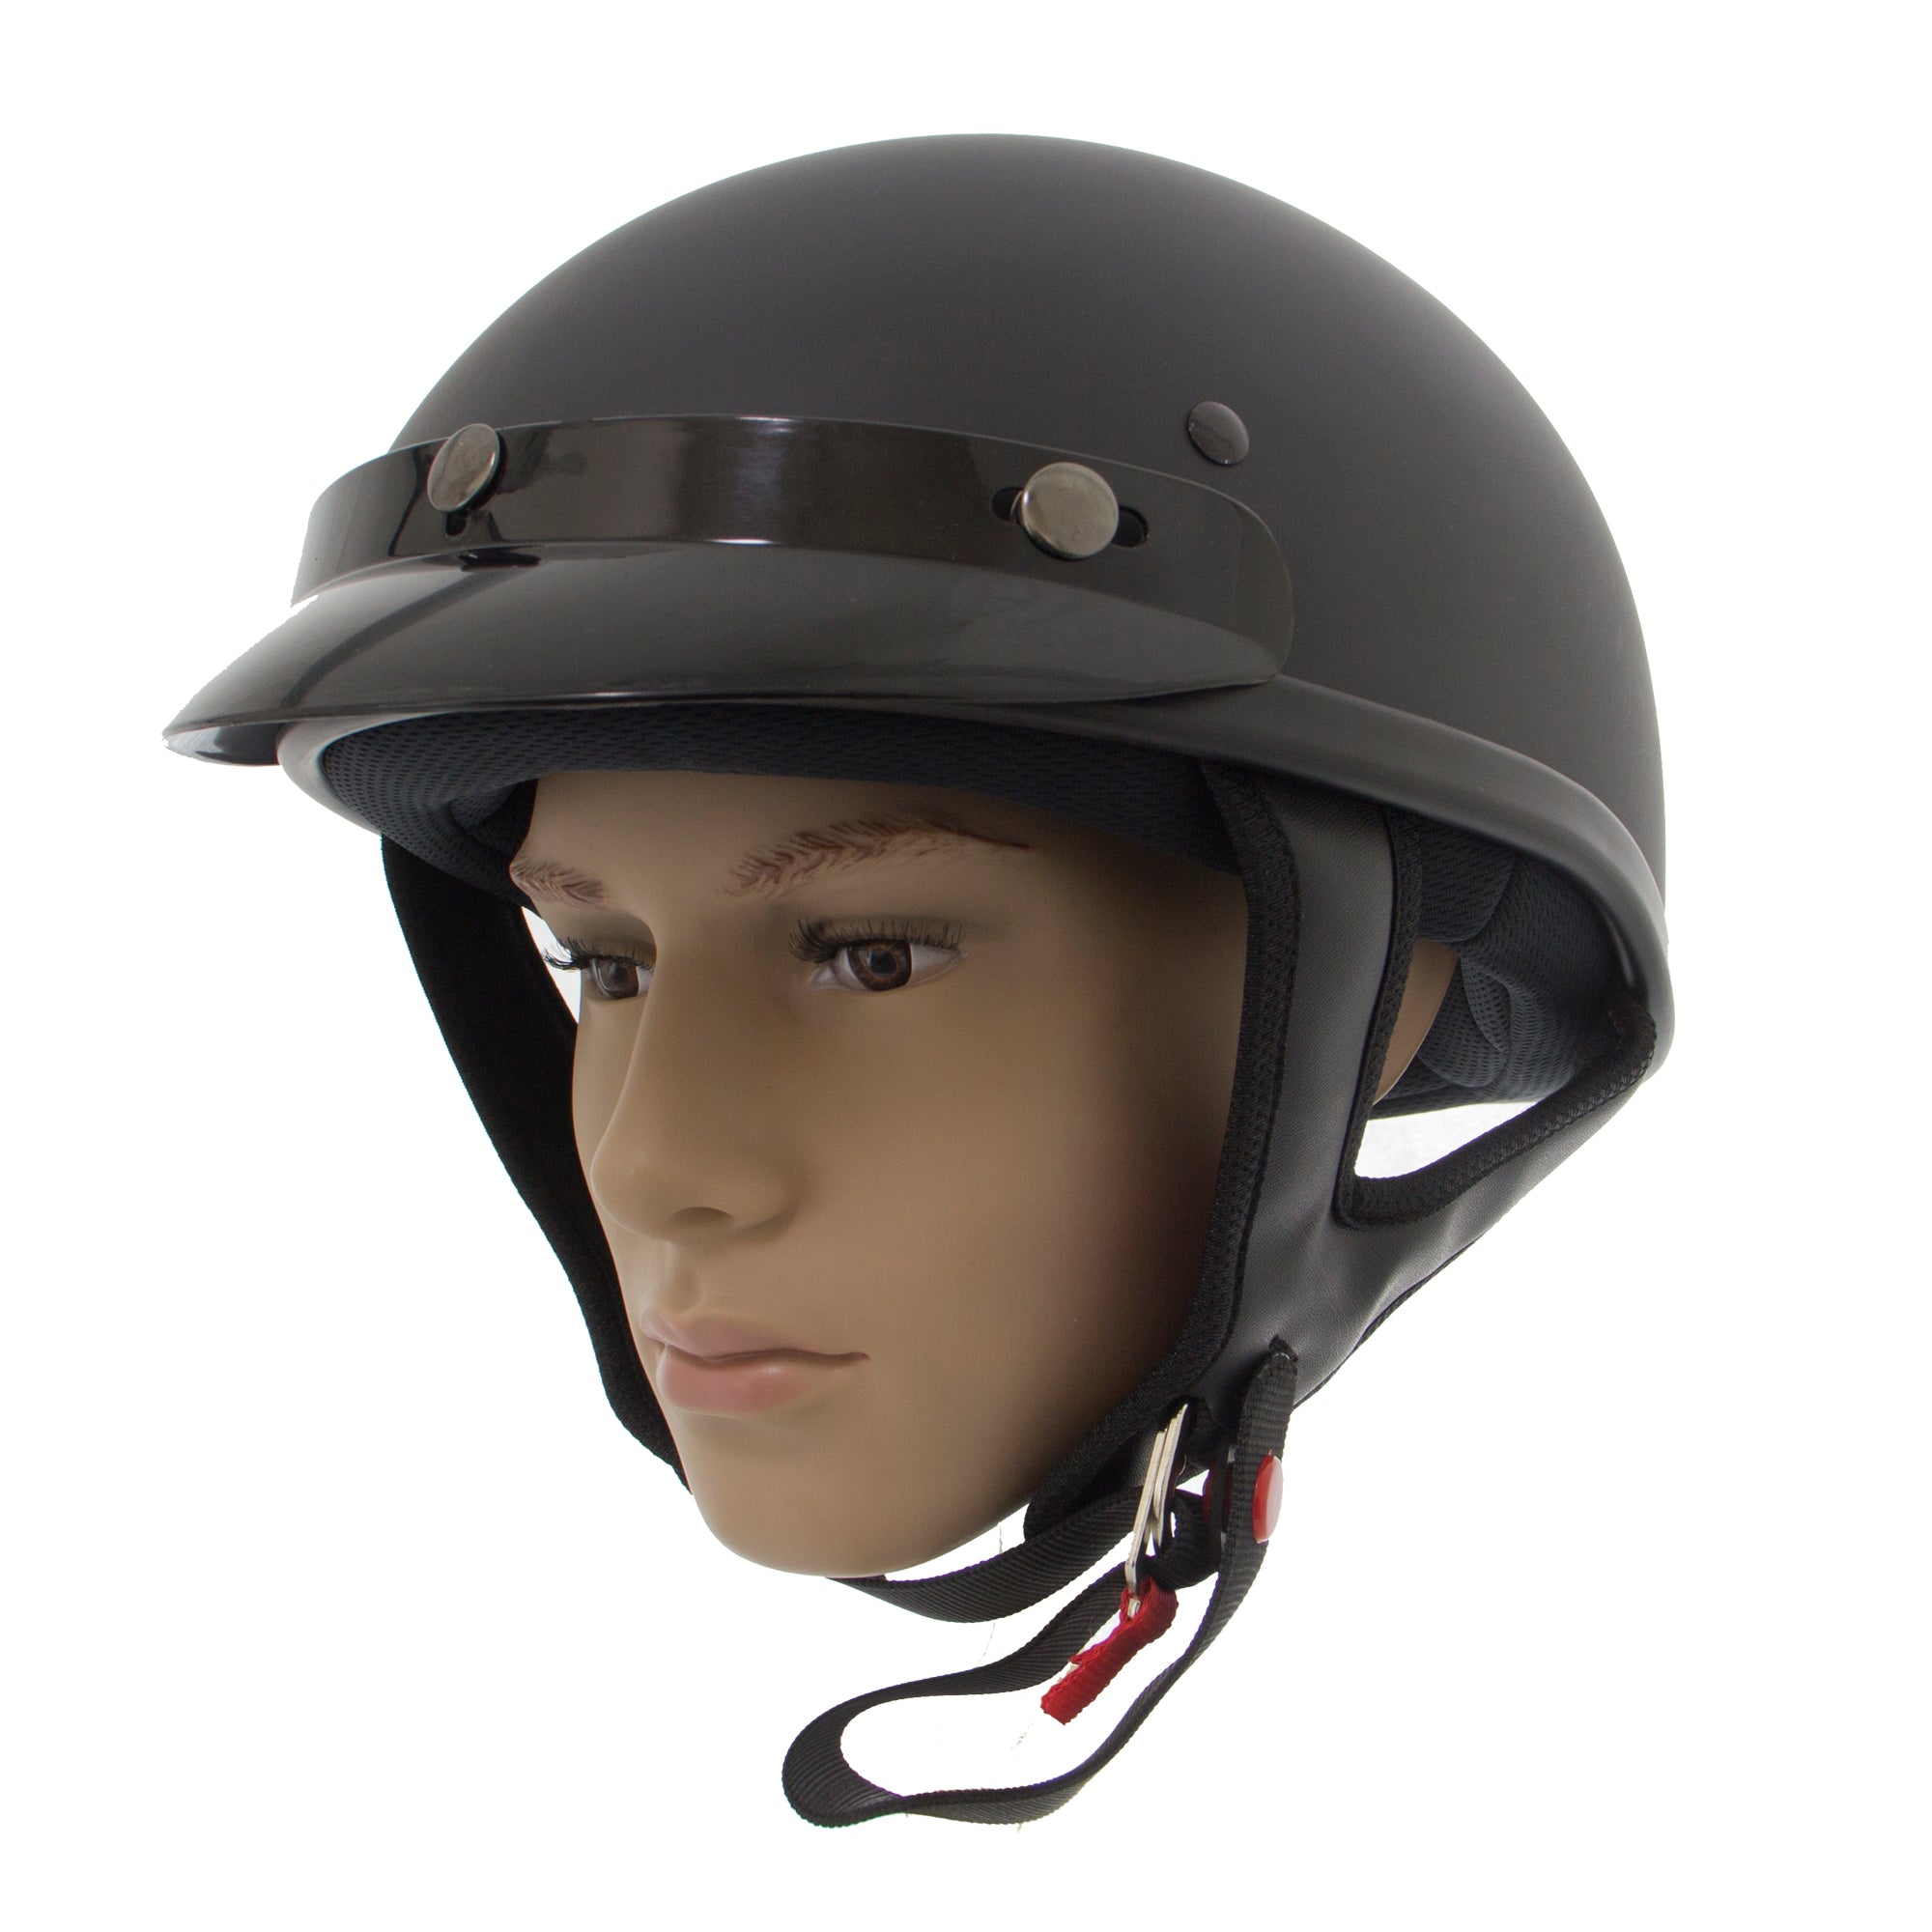 Outlaw Helmets T68 Matte Black Motorcycle Half Helmet for Men